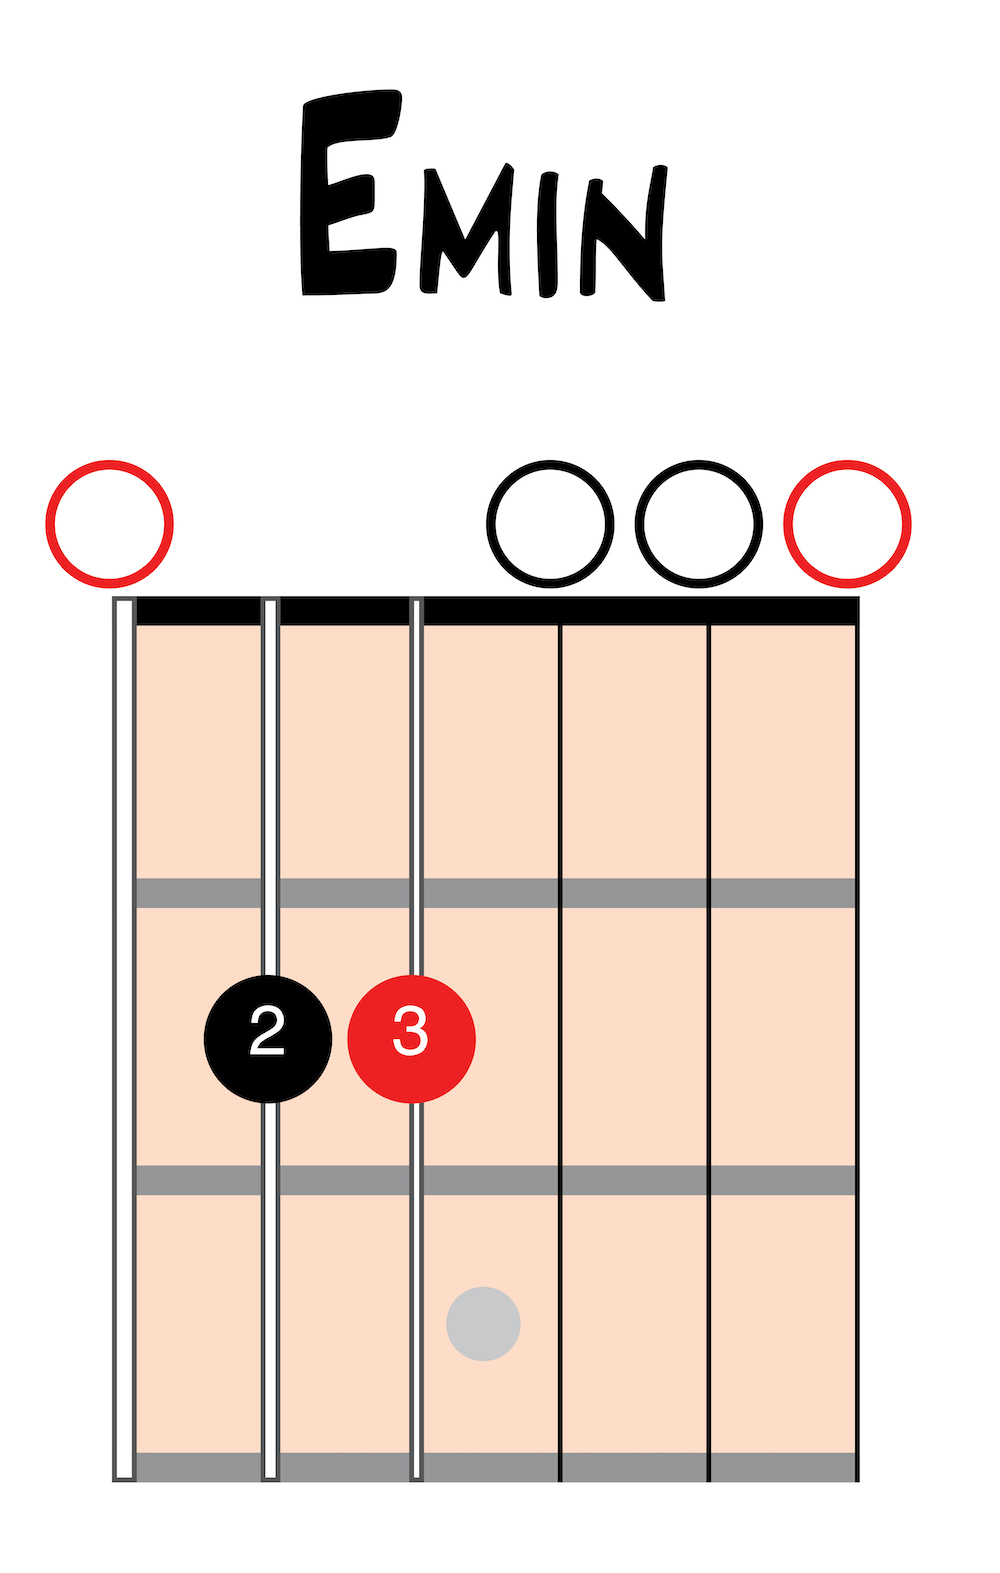 Chord diagram example